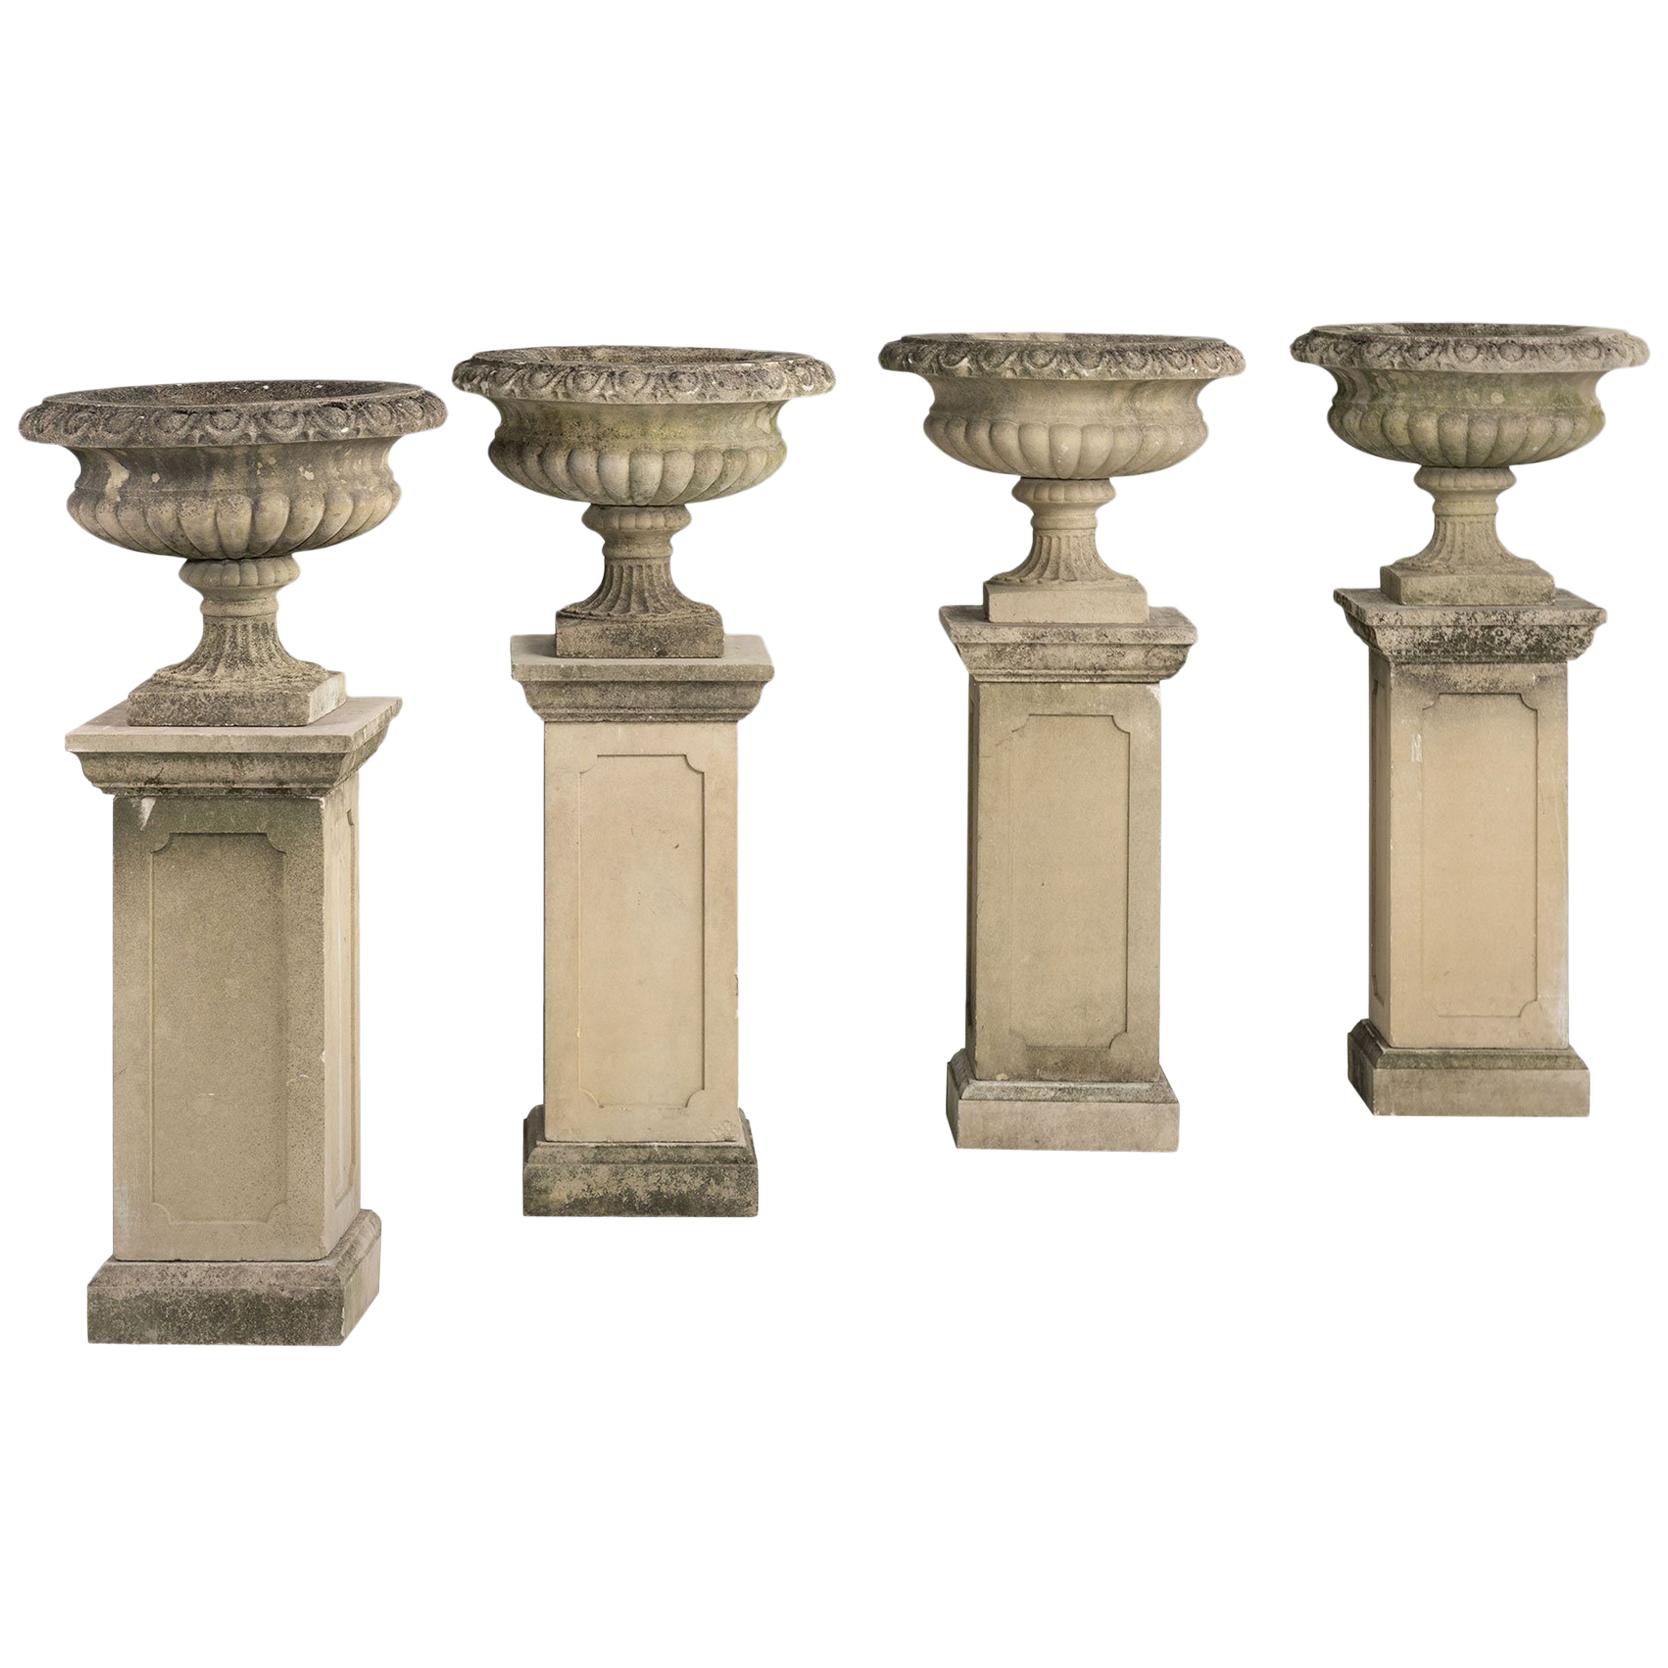 Series of Four Garden Urns with Pedestals, circa 1950